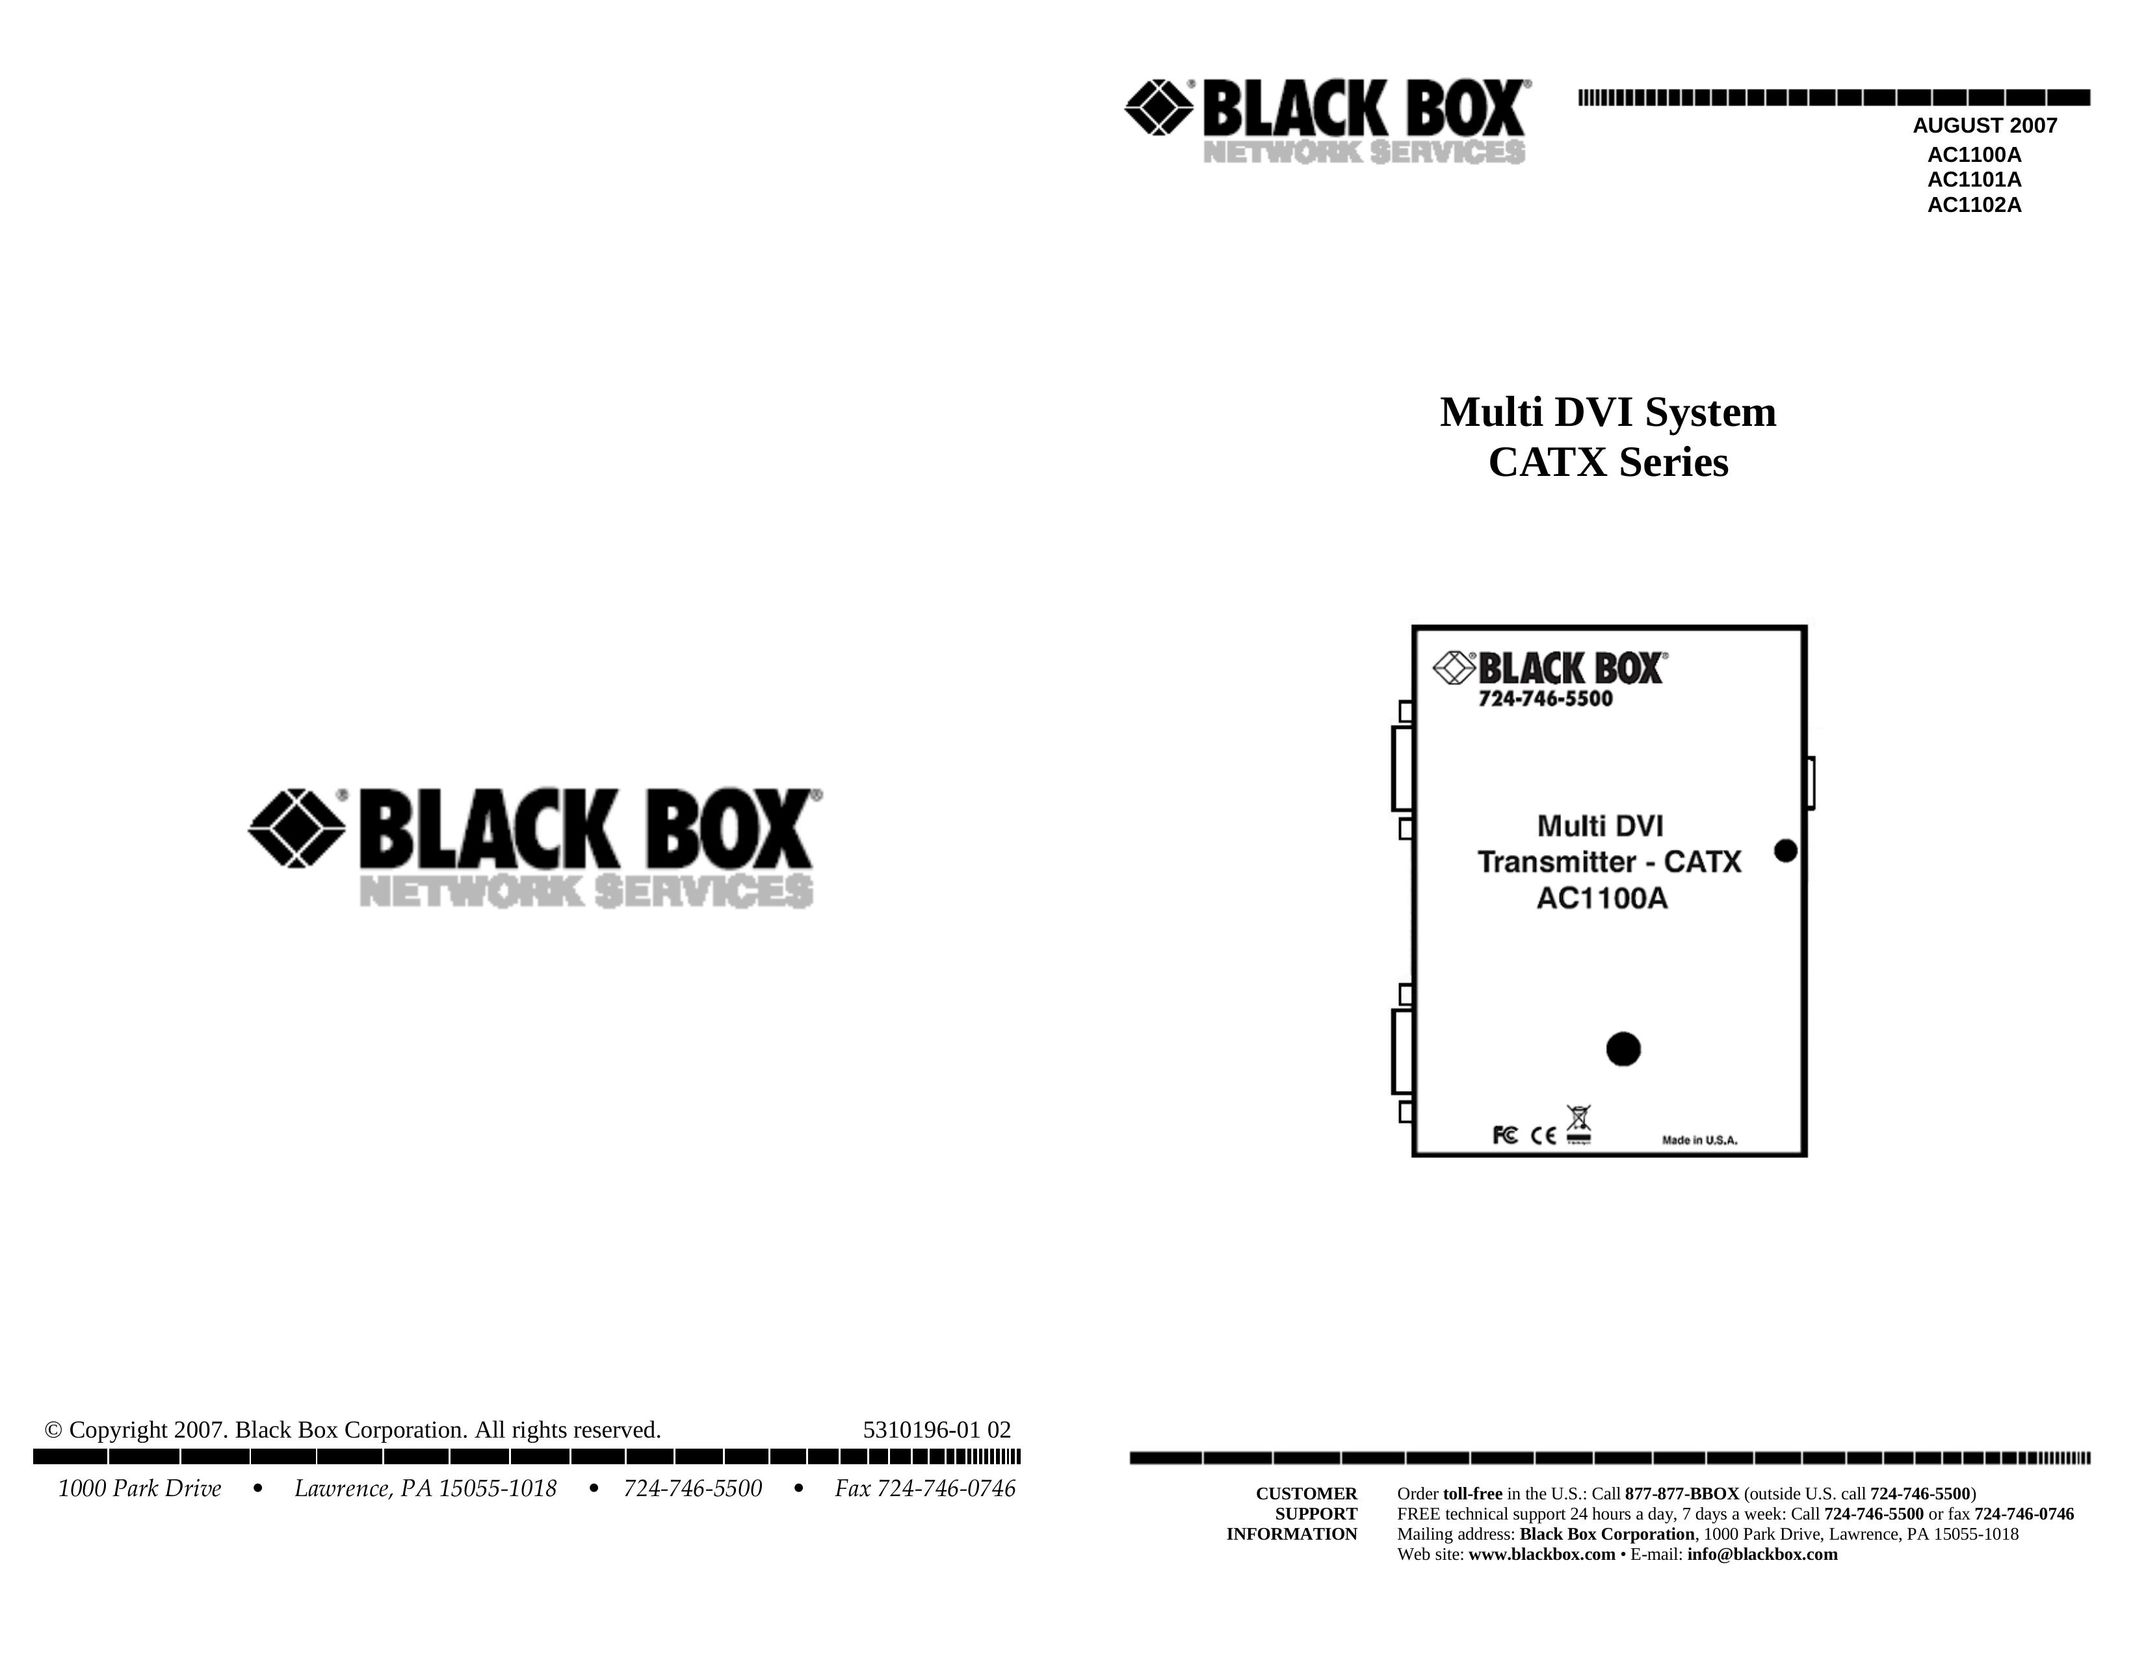 Black Box Multi DVI System CATX Series Electronic Accessory User Manual